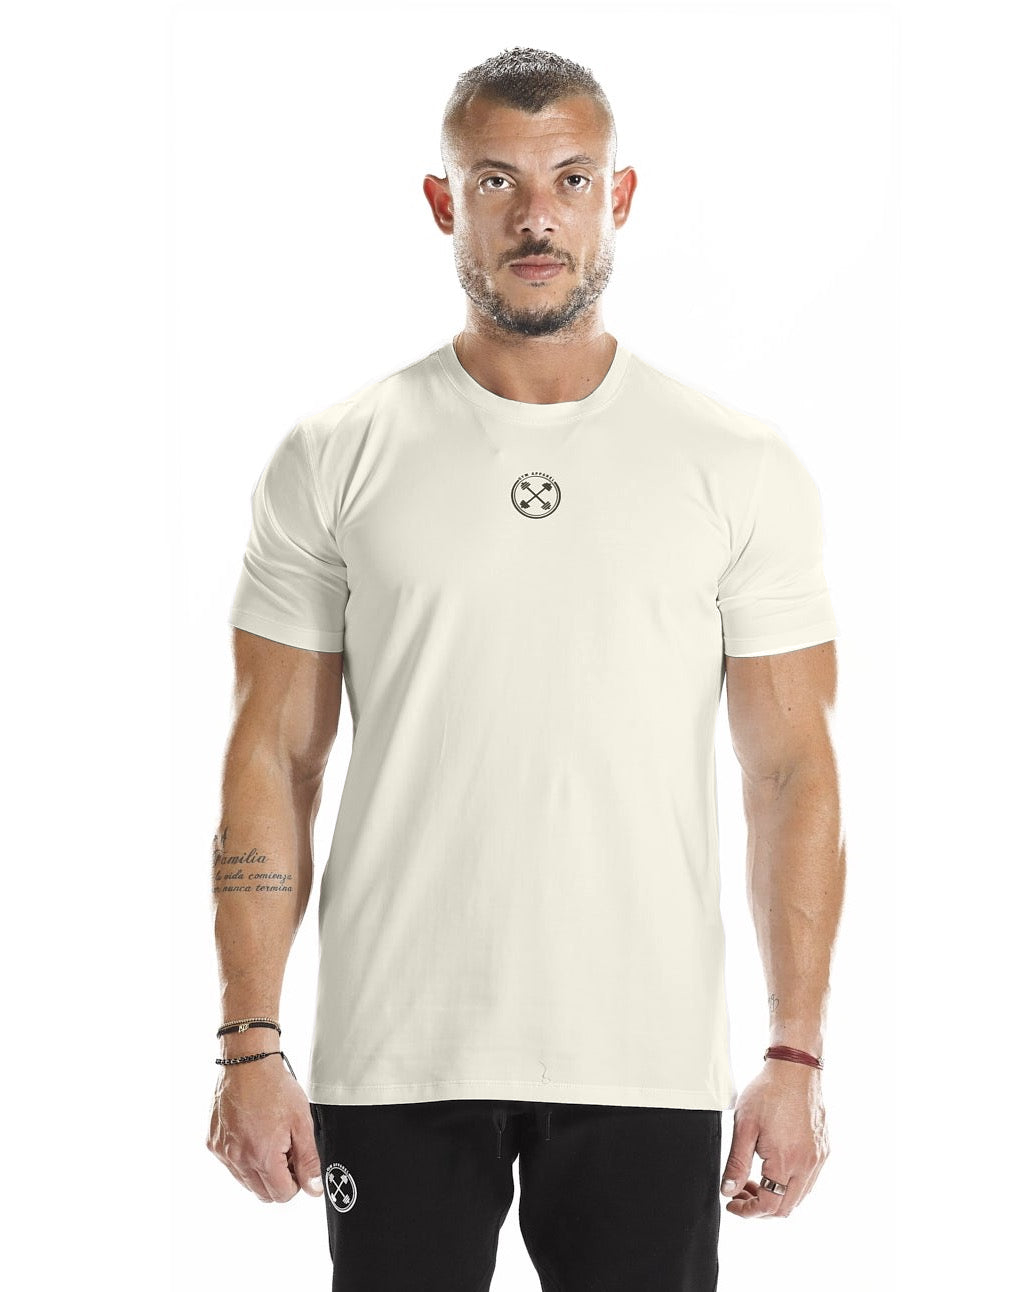 Bar-Basic T-shirt 2.0 [Cotton/Lycra] - T-Shirt - Gym Apparel Egypt